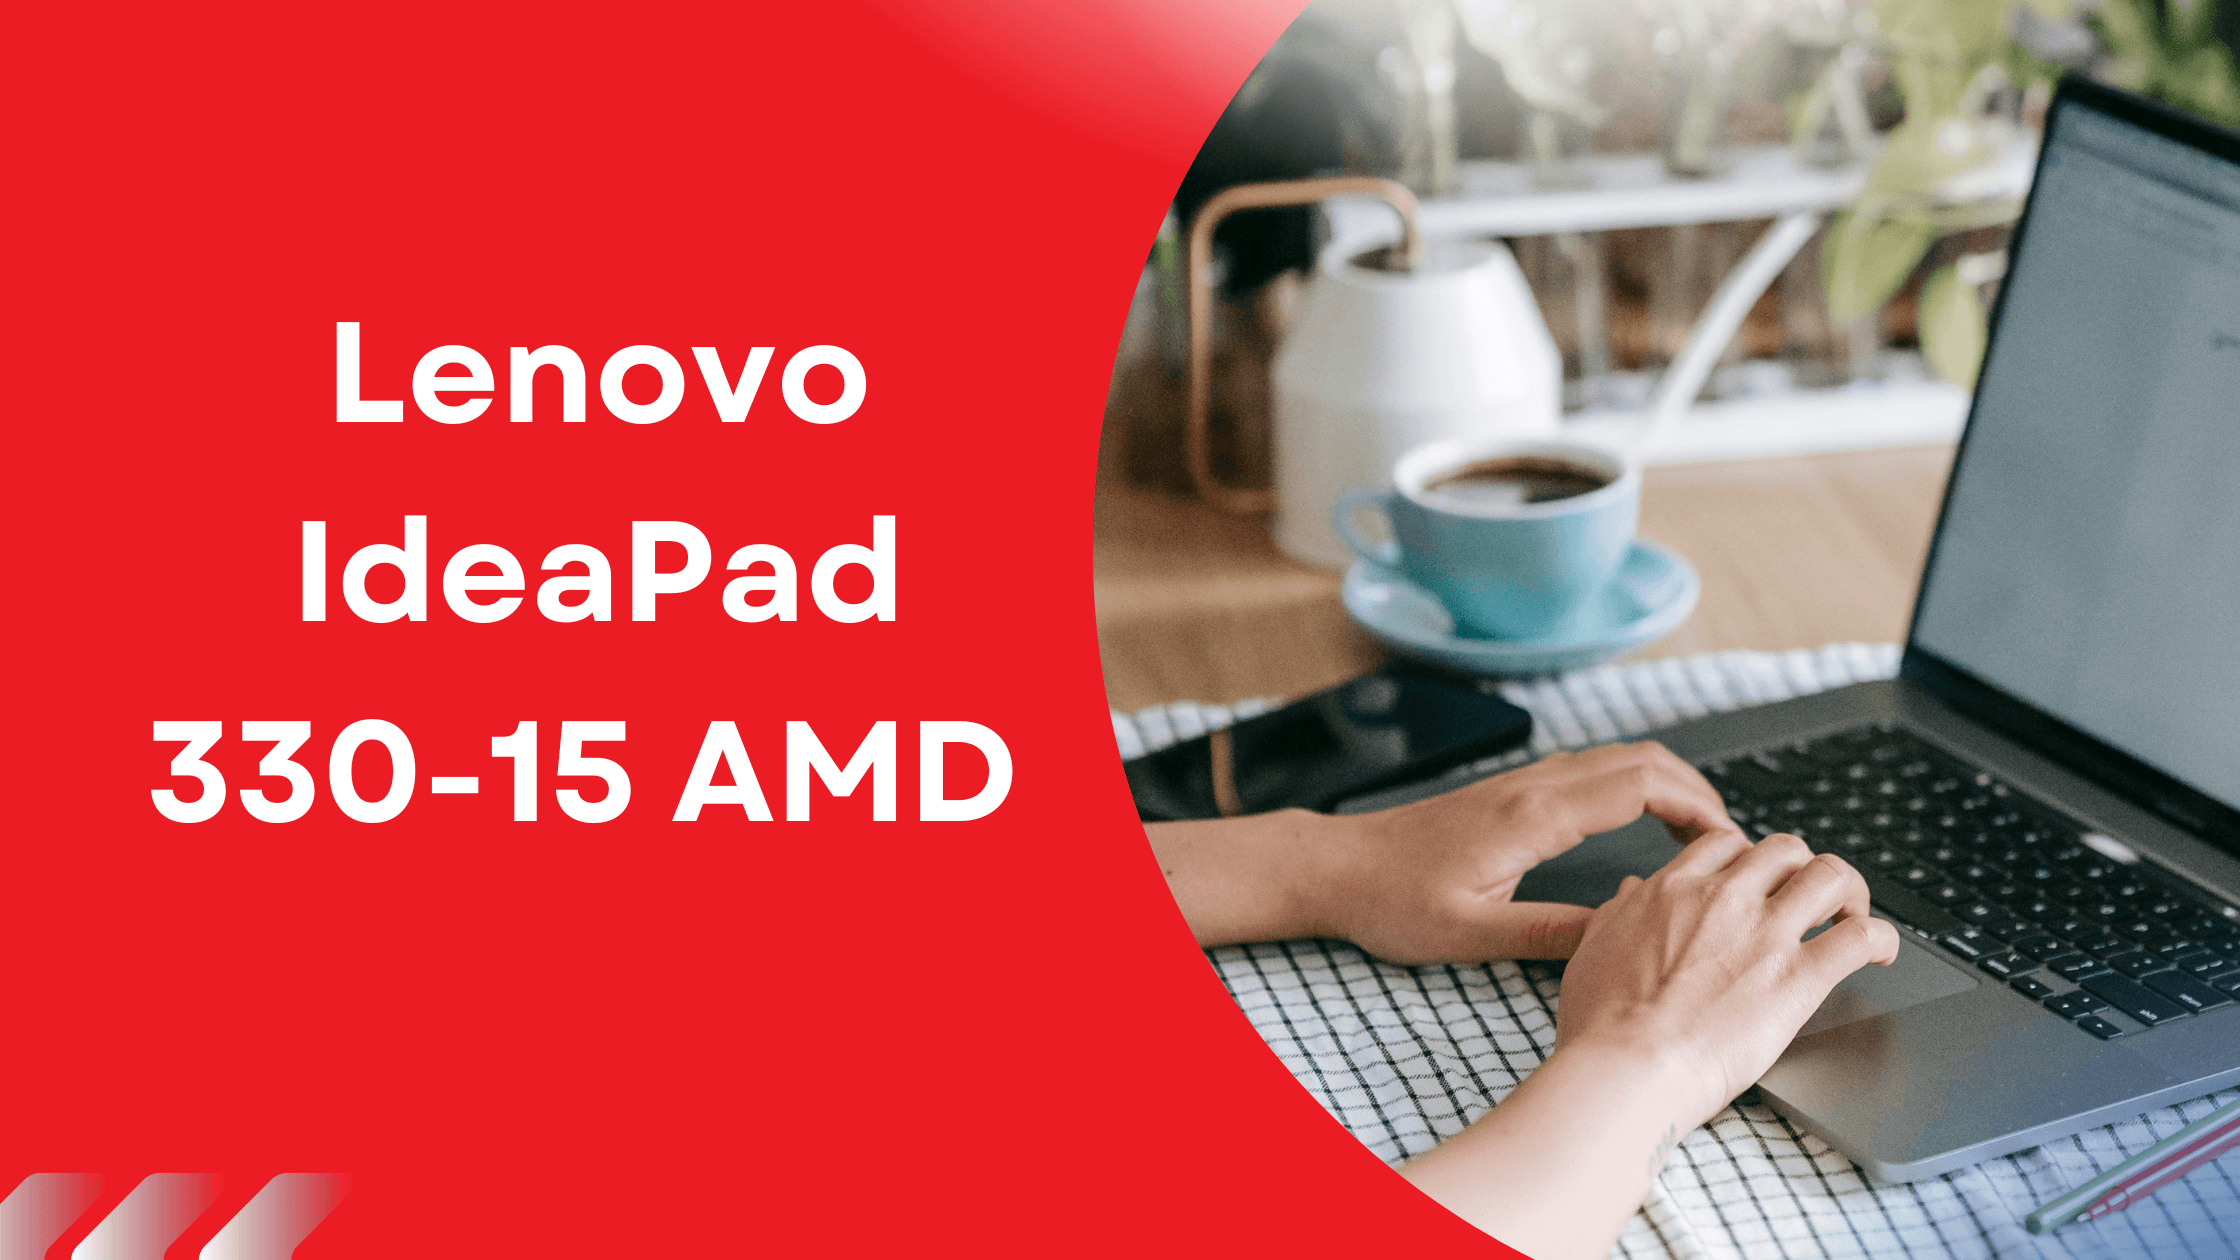 Lenovo IdeaPad 330-15 AMD- Specs And Full Reviews - StartupNoon 🚀